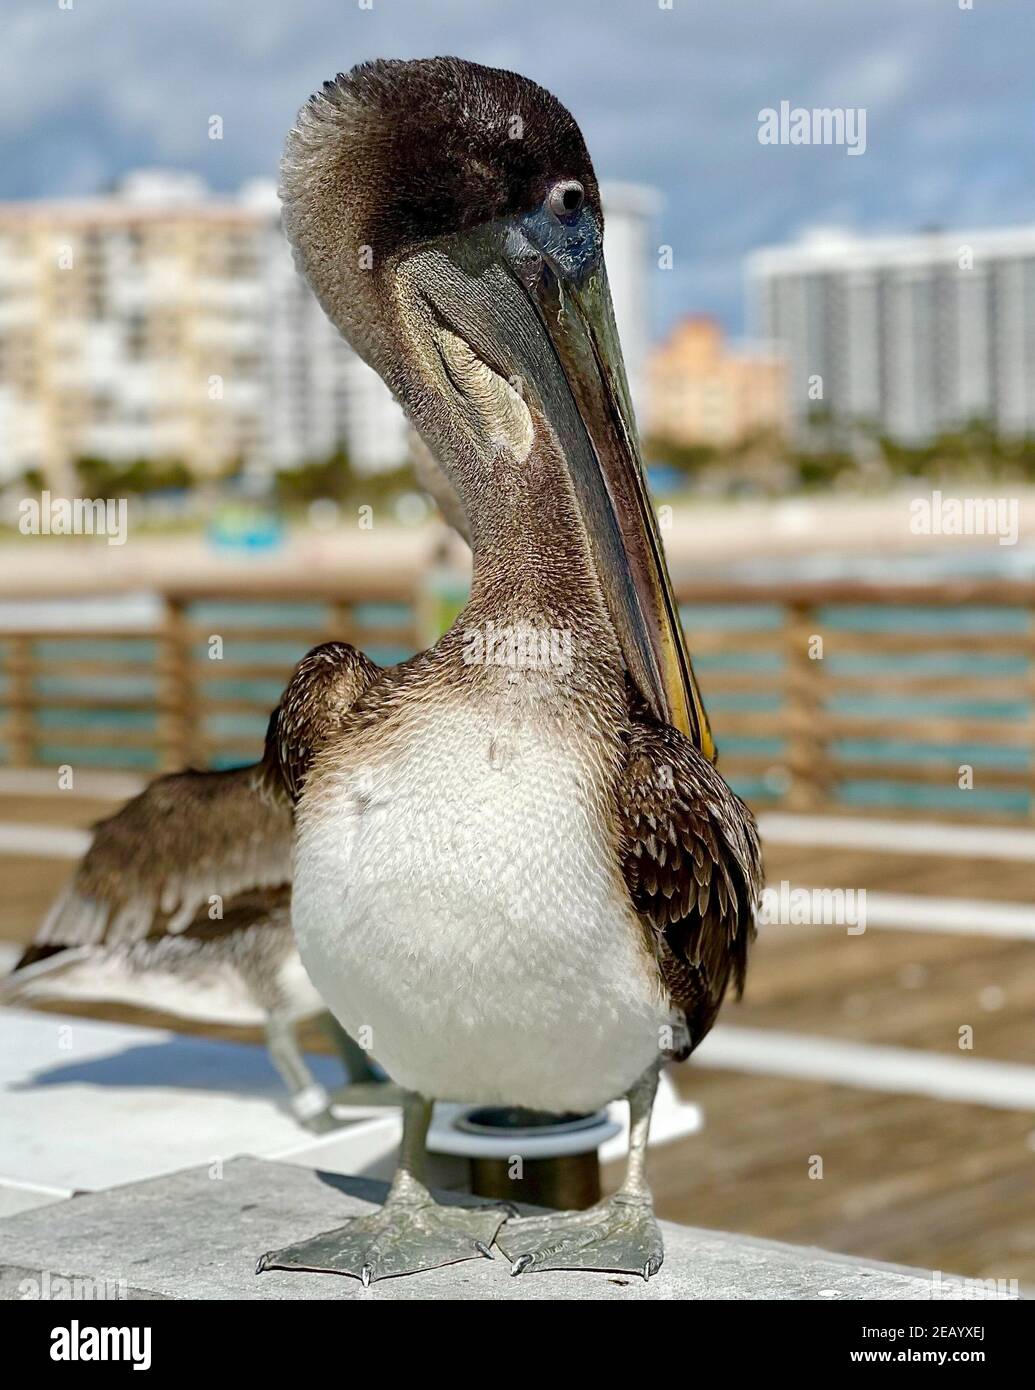 Closeup of a pelican bird with a long beak in the Pompano Beach in Florida Stock Photo